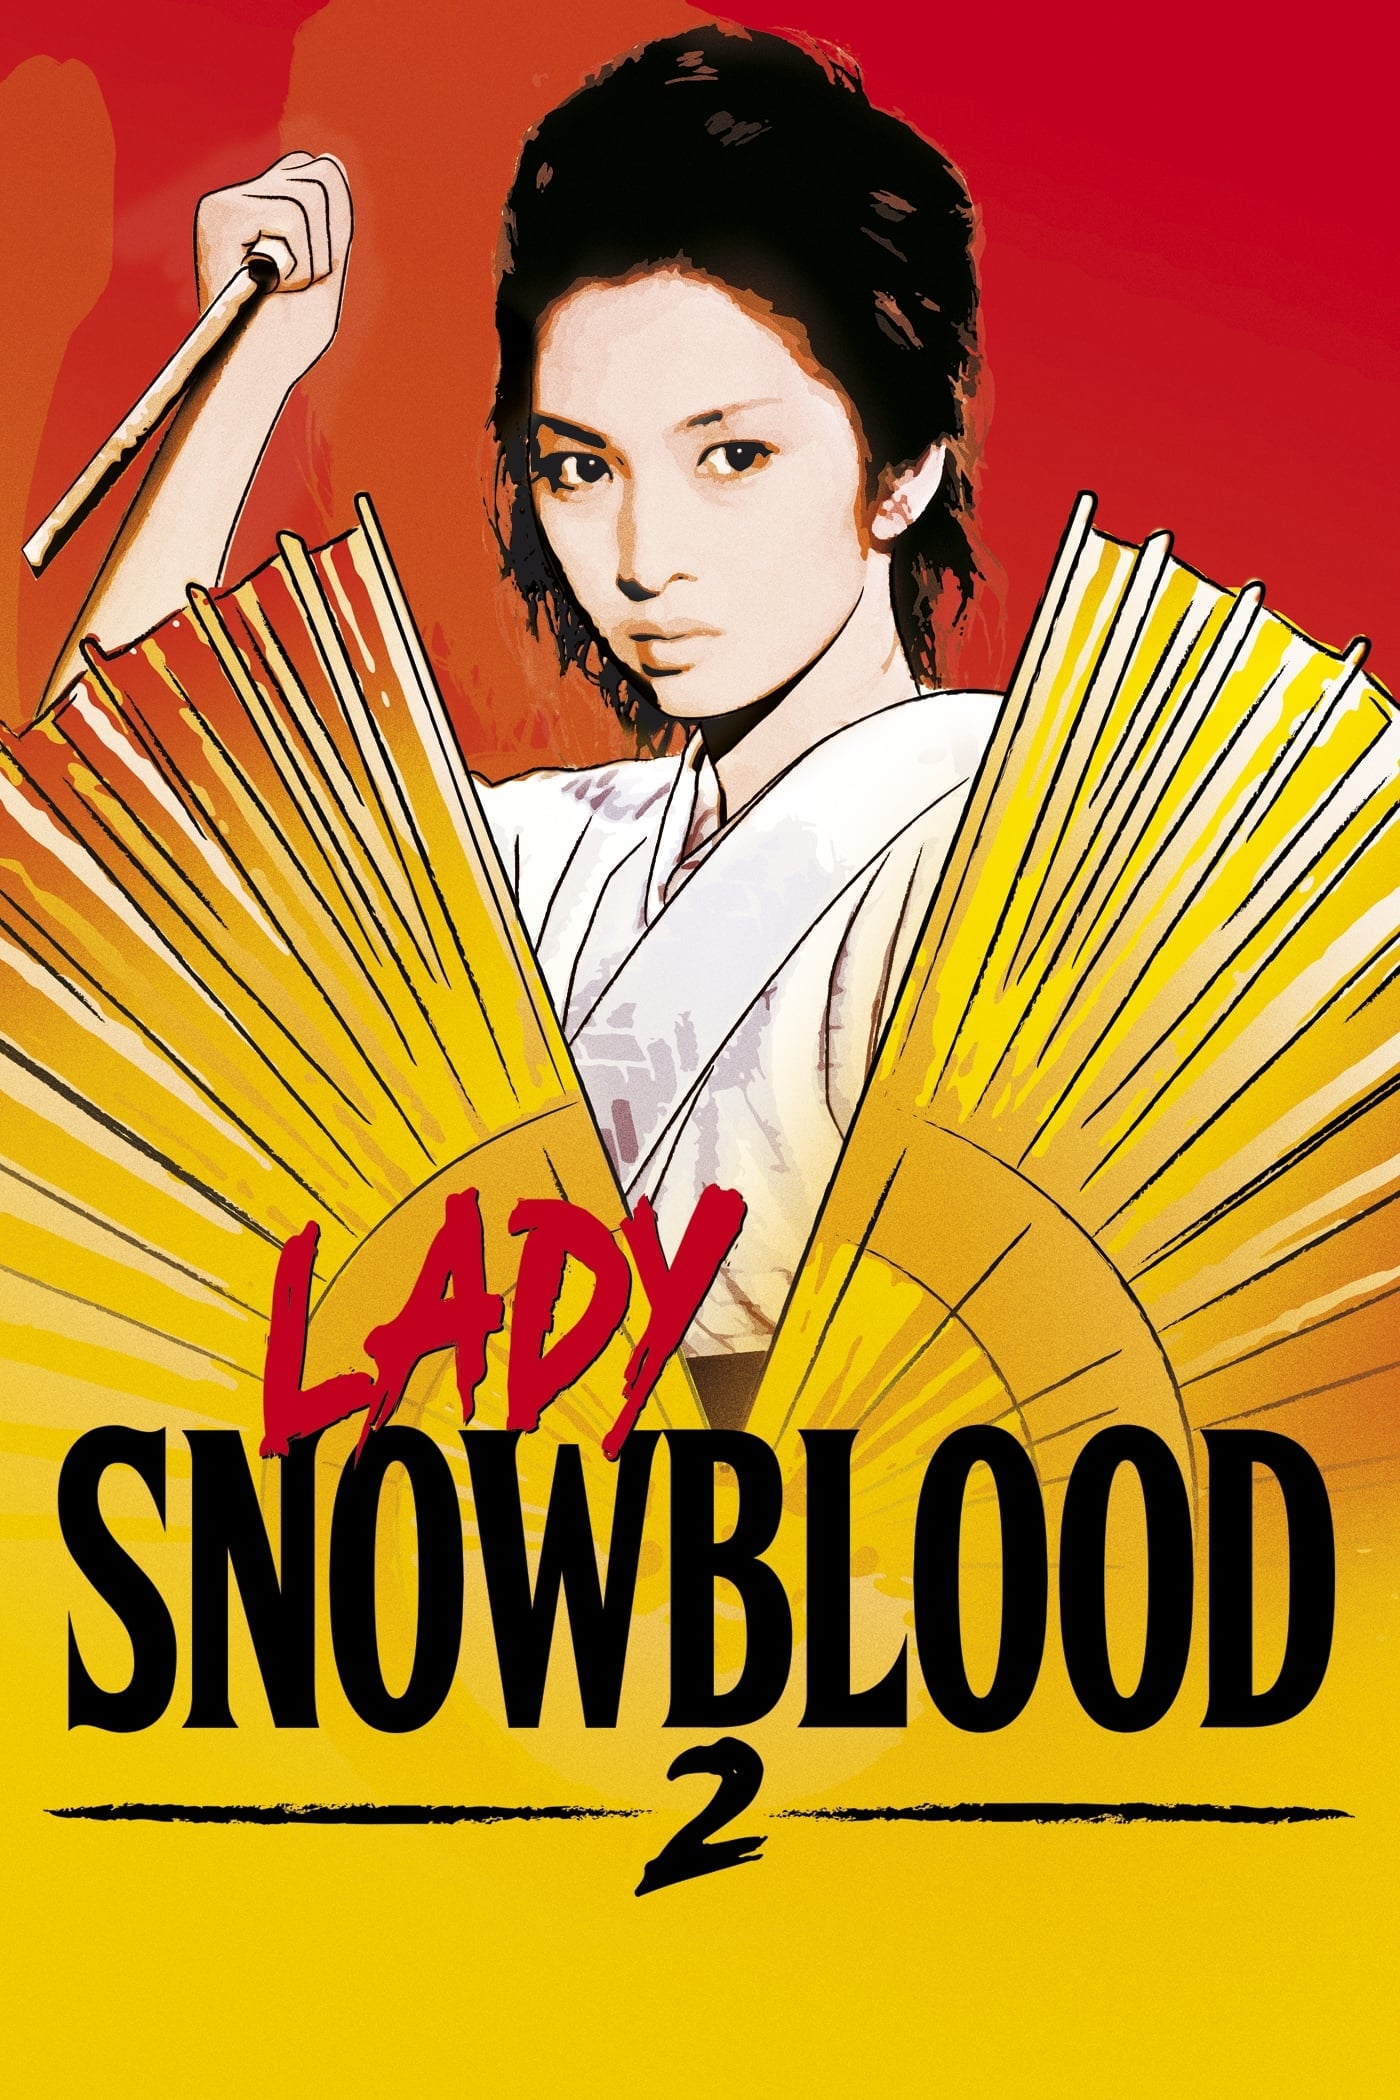 Lady Snowblood 2 (1974)